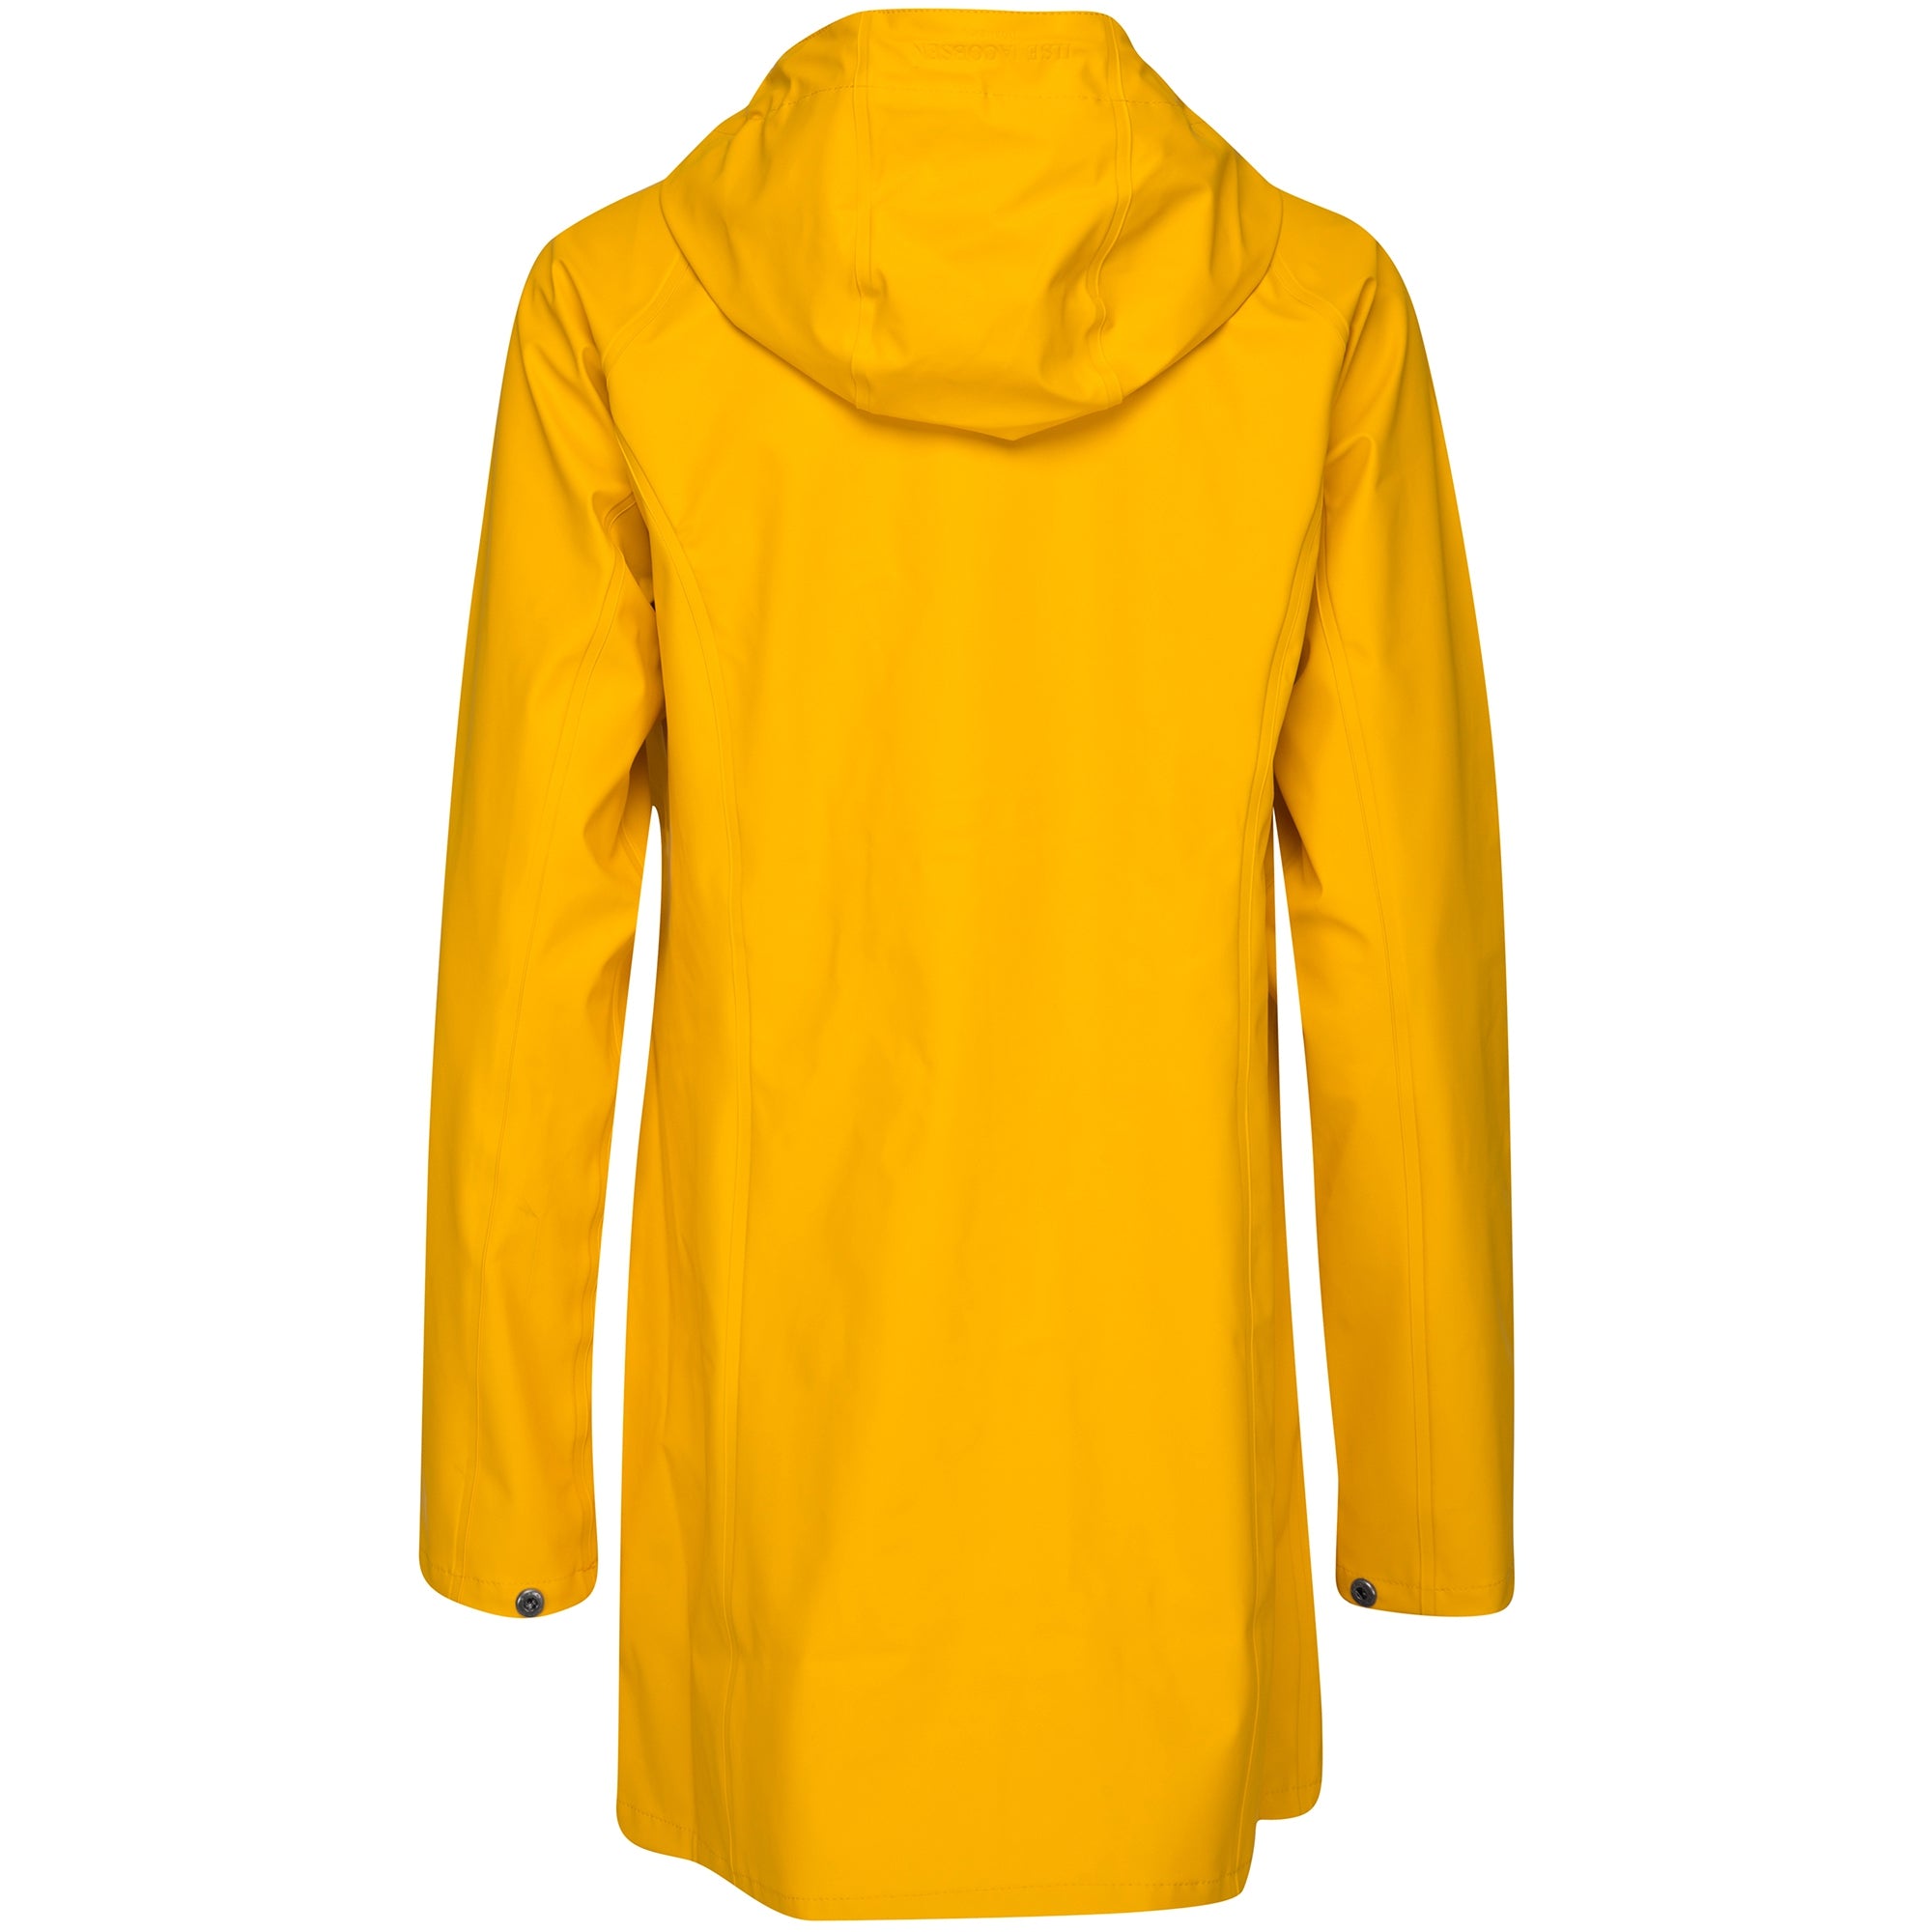 Raincoat RAIN87 - 808 Cyber Yellow | Cyber Yellow